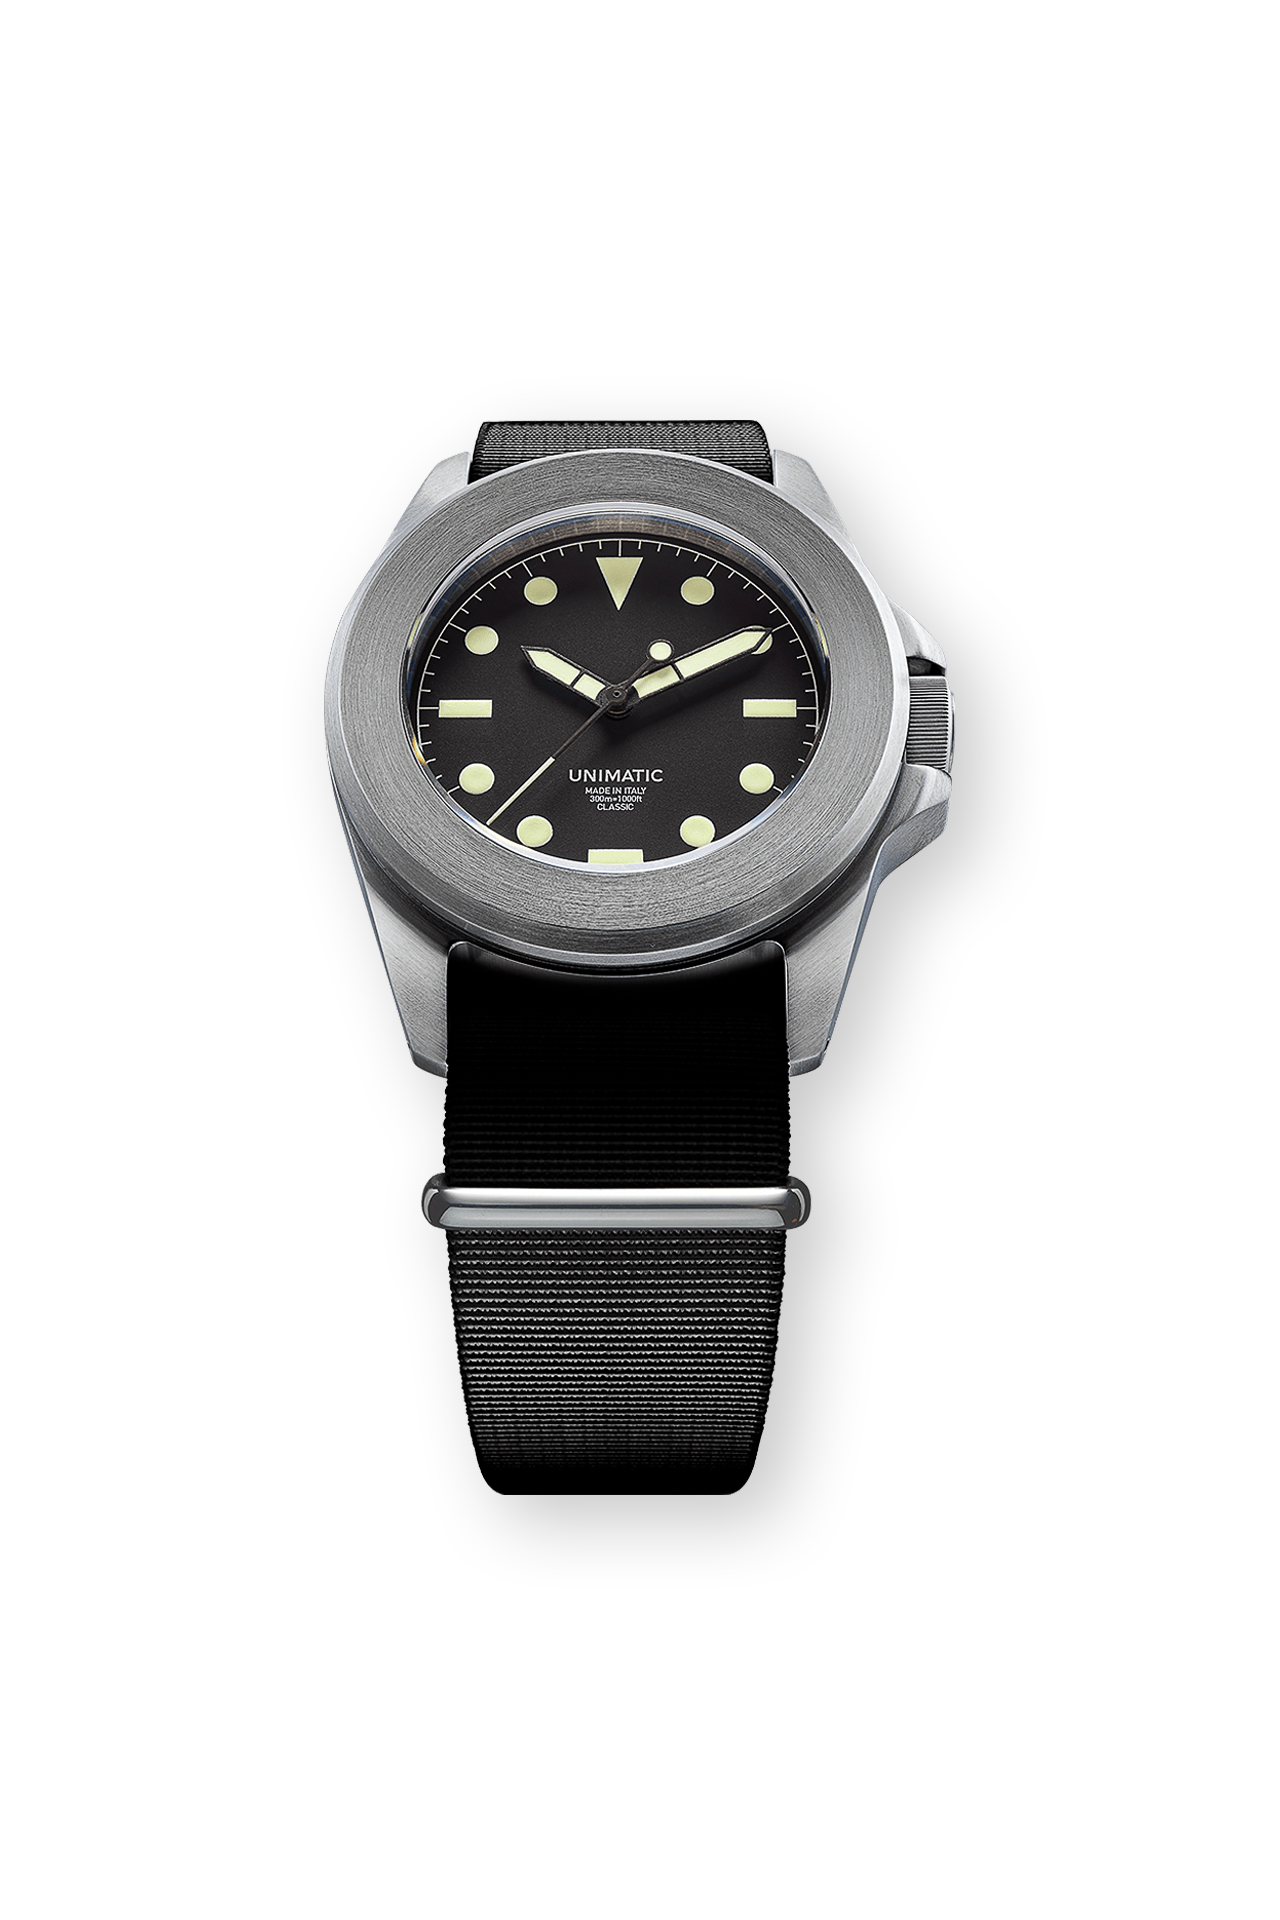 Unimatic Watch Kit U4 Classic Front Image (6648732385395)